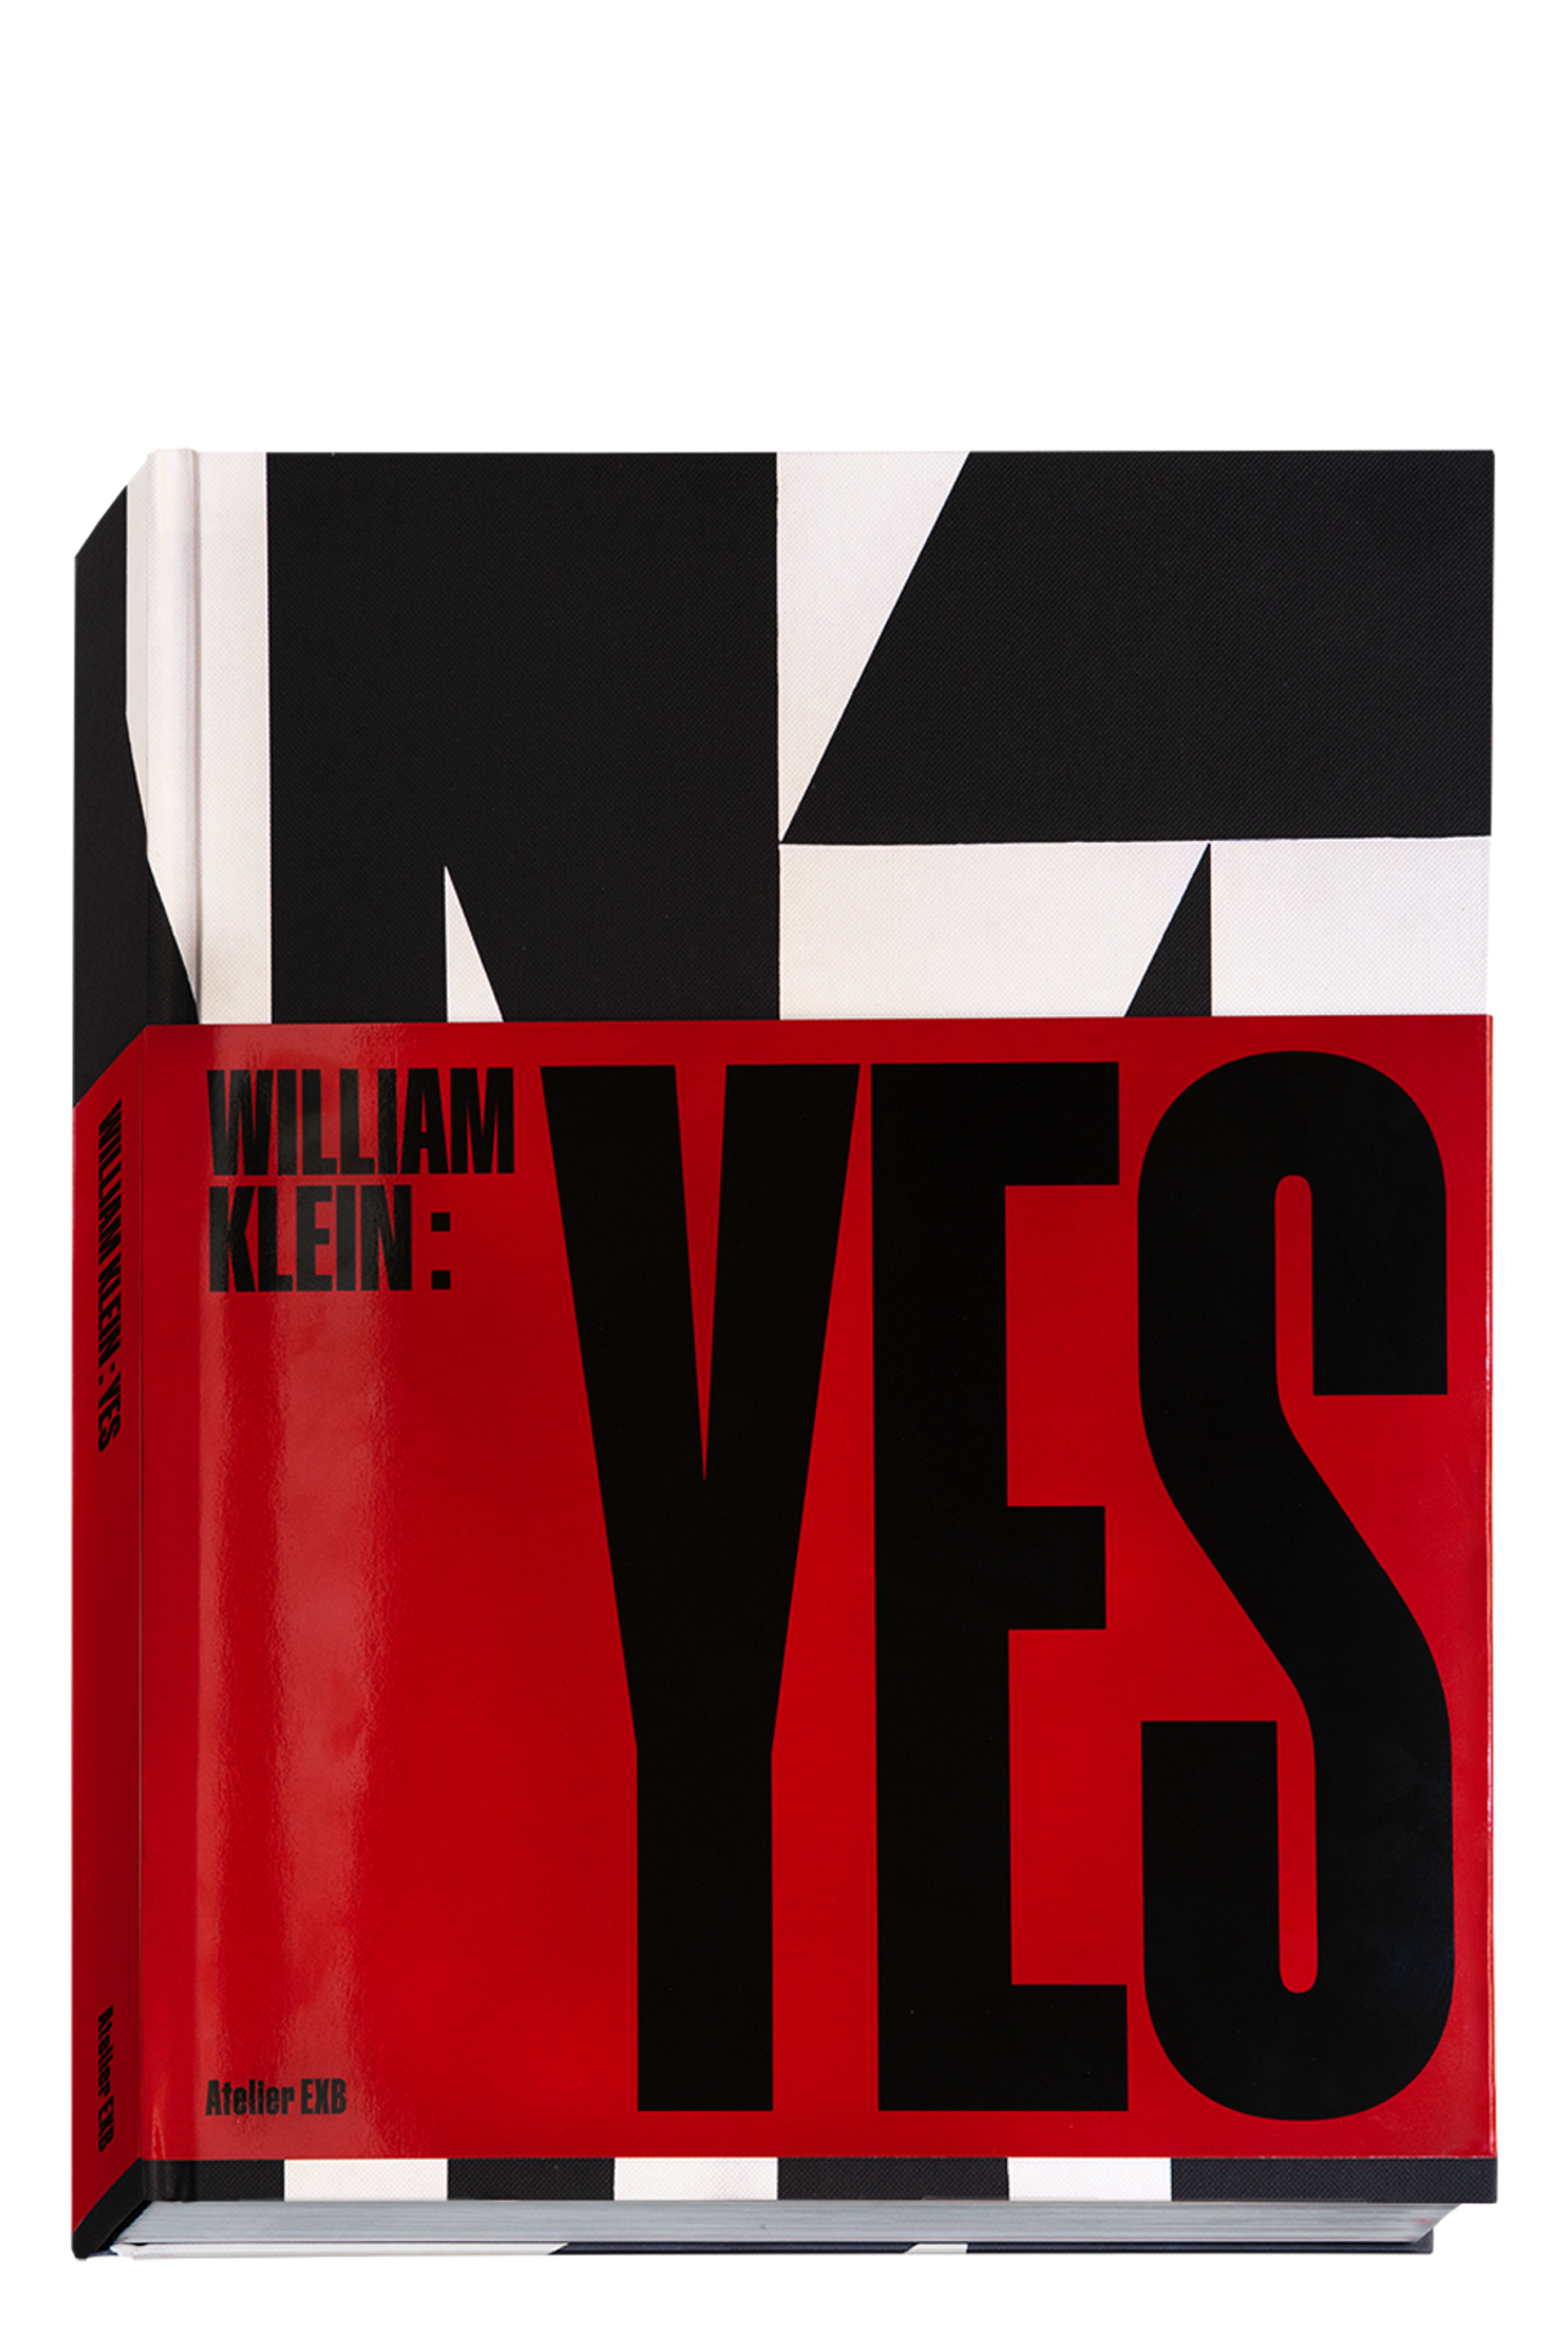 William Klein – Yes, Atelier EXB. D.R.